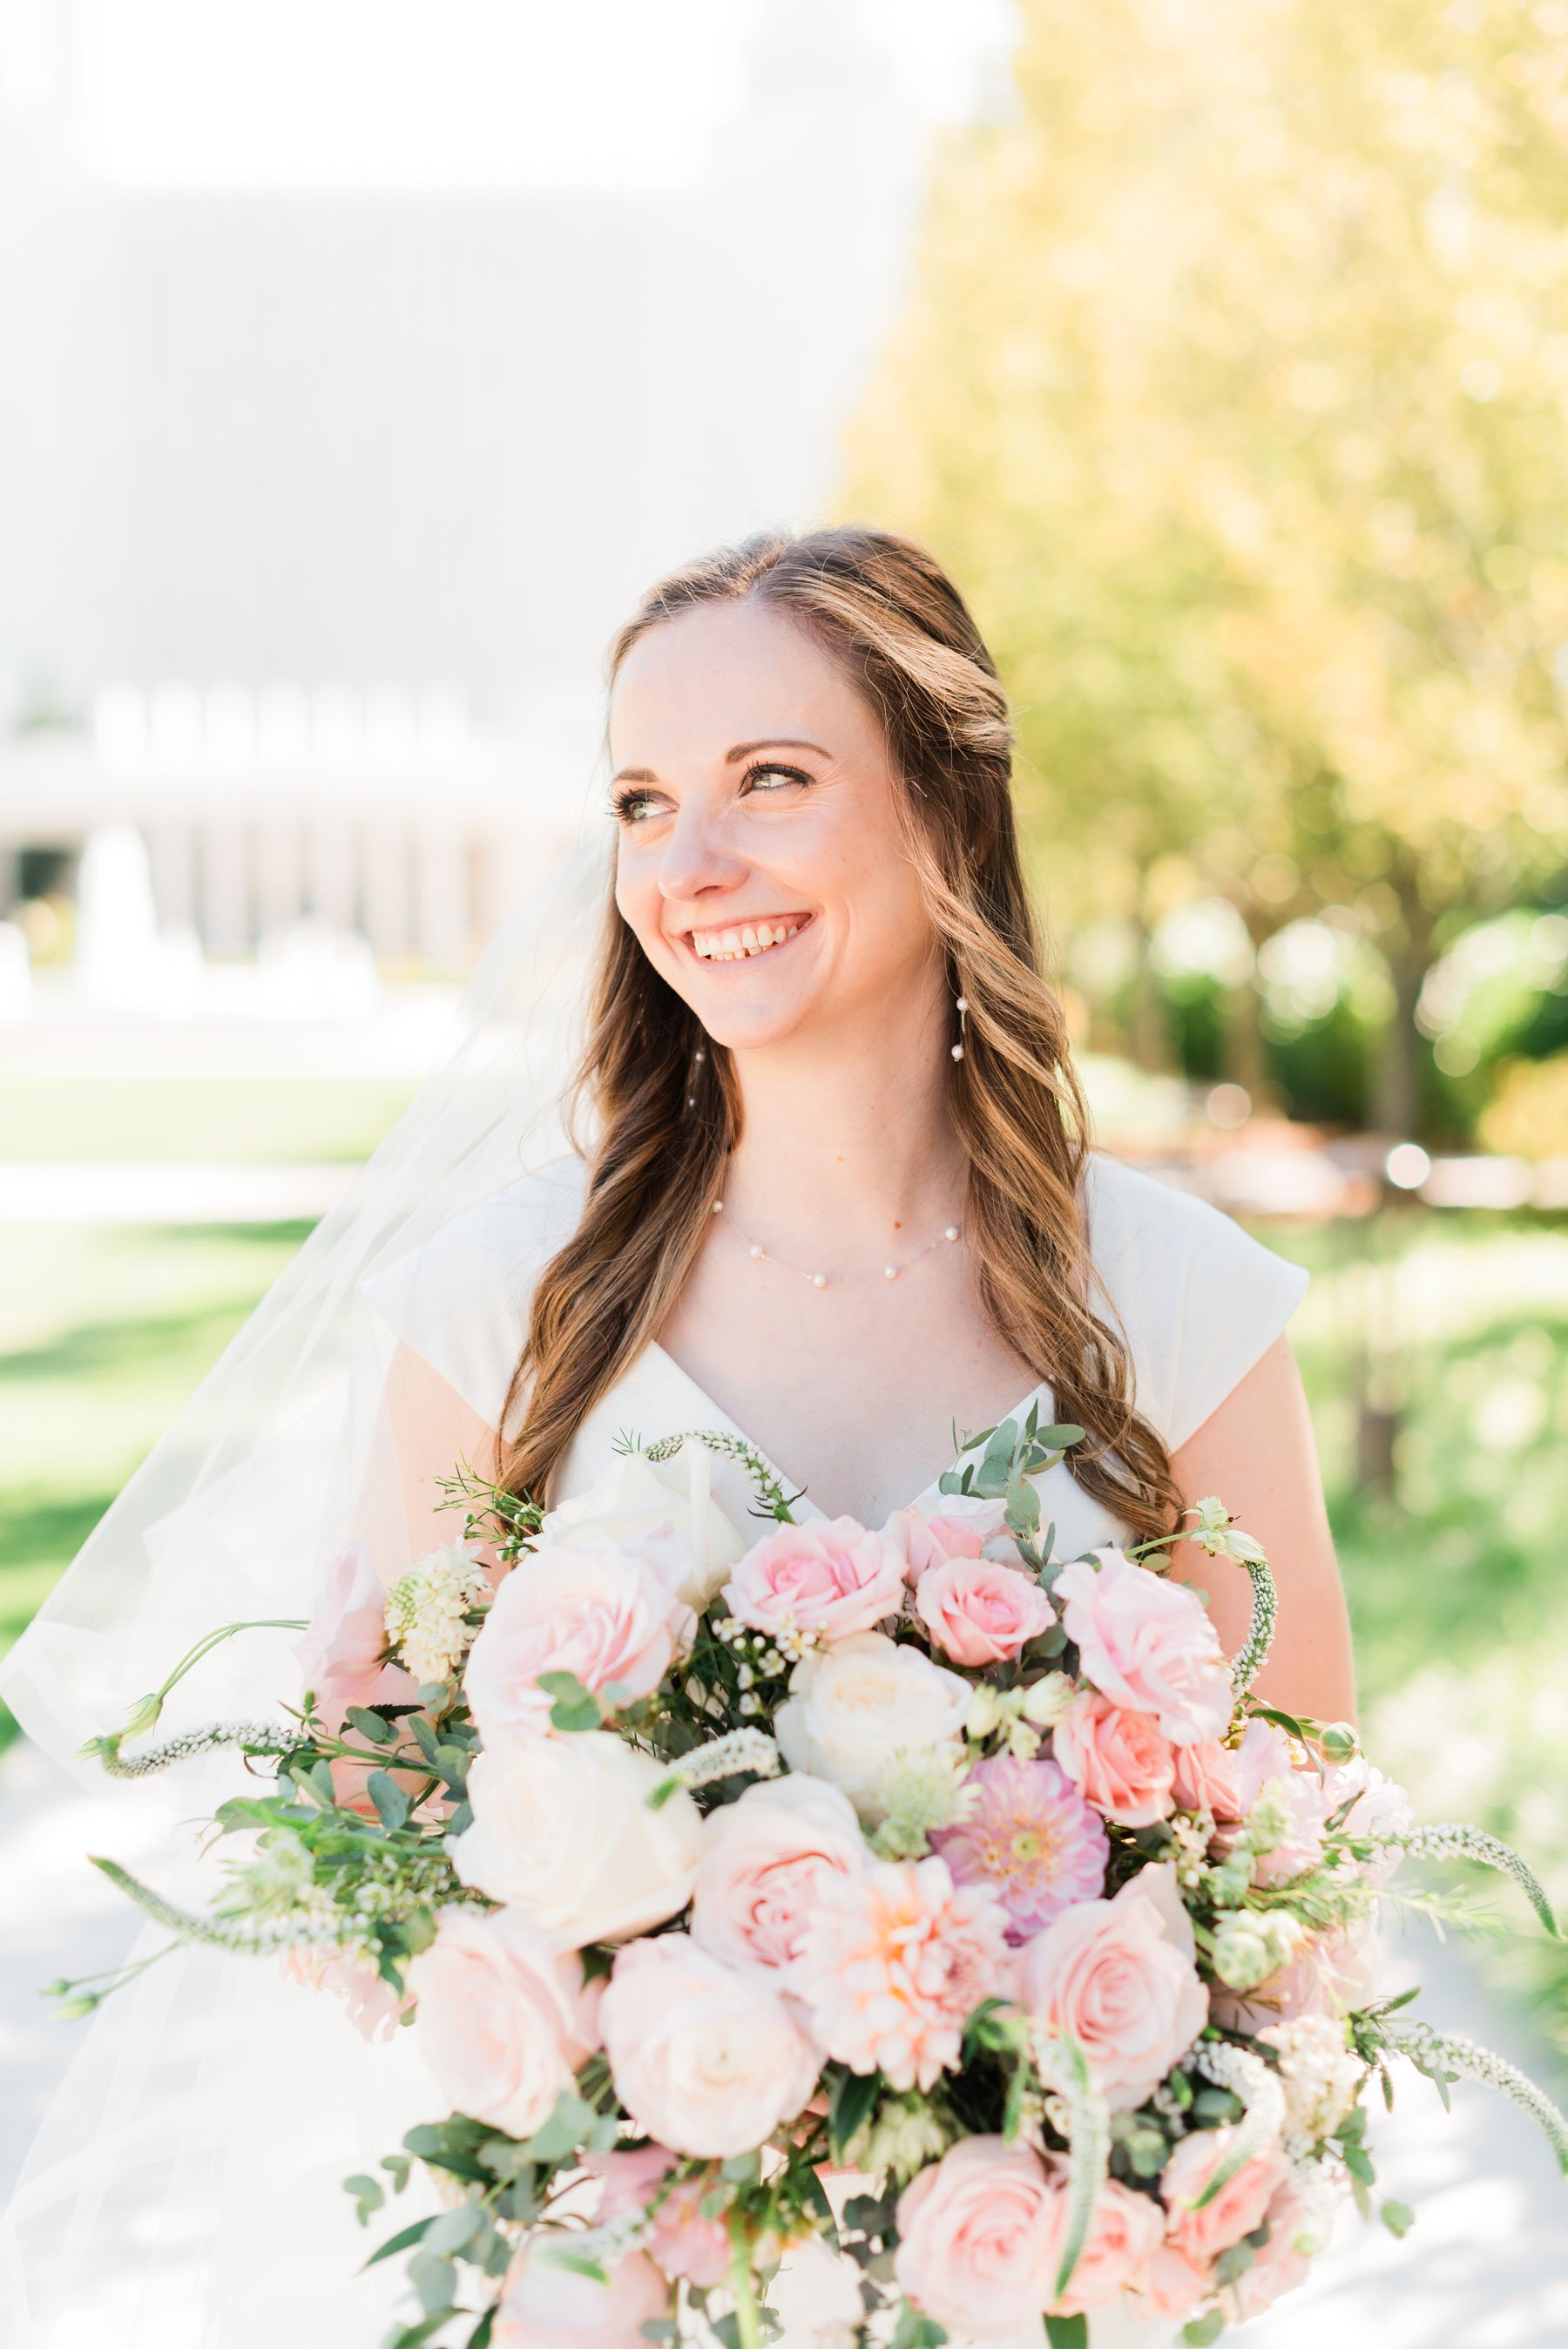    This gorgeous bride smiles for a portrait with her breathtaking bouquet full of blush roses. #washingtondctemple #washingtondcweddingphotographer #dcwedding #pinkwedding #ldsweddingphotographer #pinkweddingbouquet #washingtondctempleexit #eastcoas